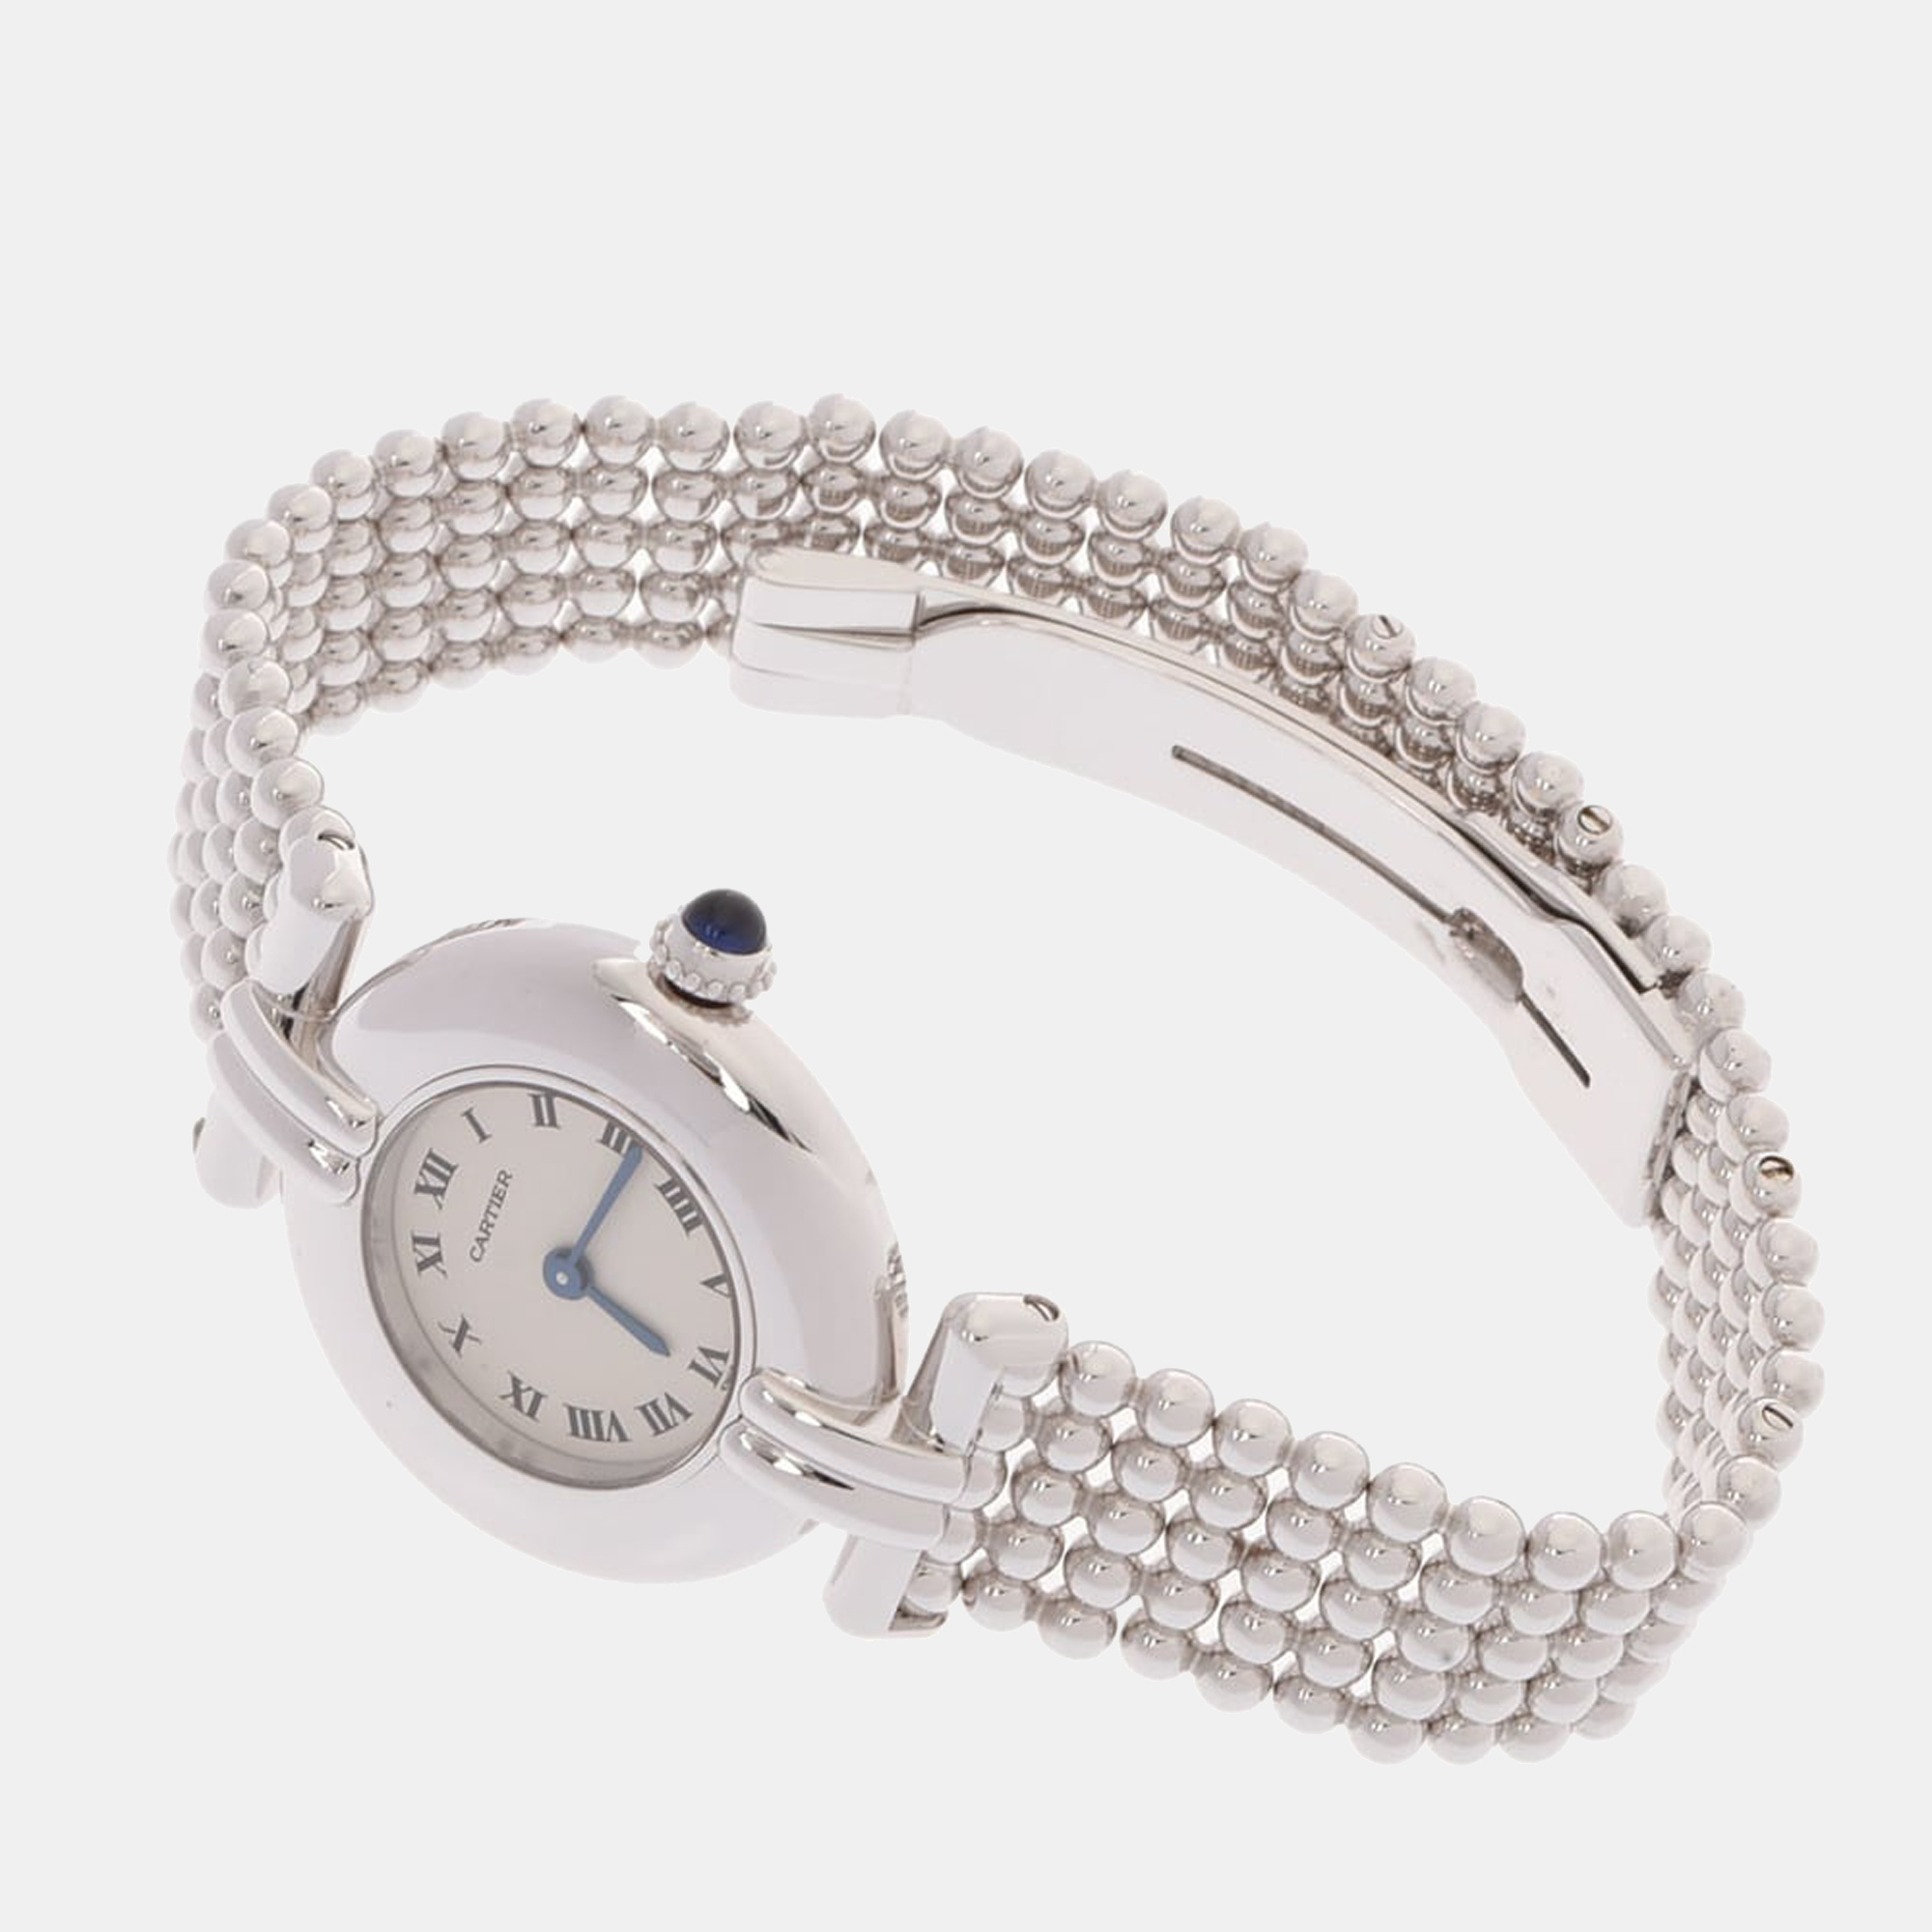 Cartier White 18K White Gold Must Colisee W15173M8 Women's Wristwatch 24 Mm